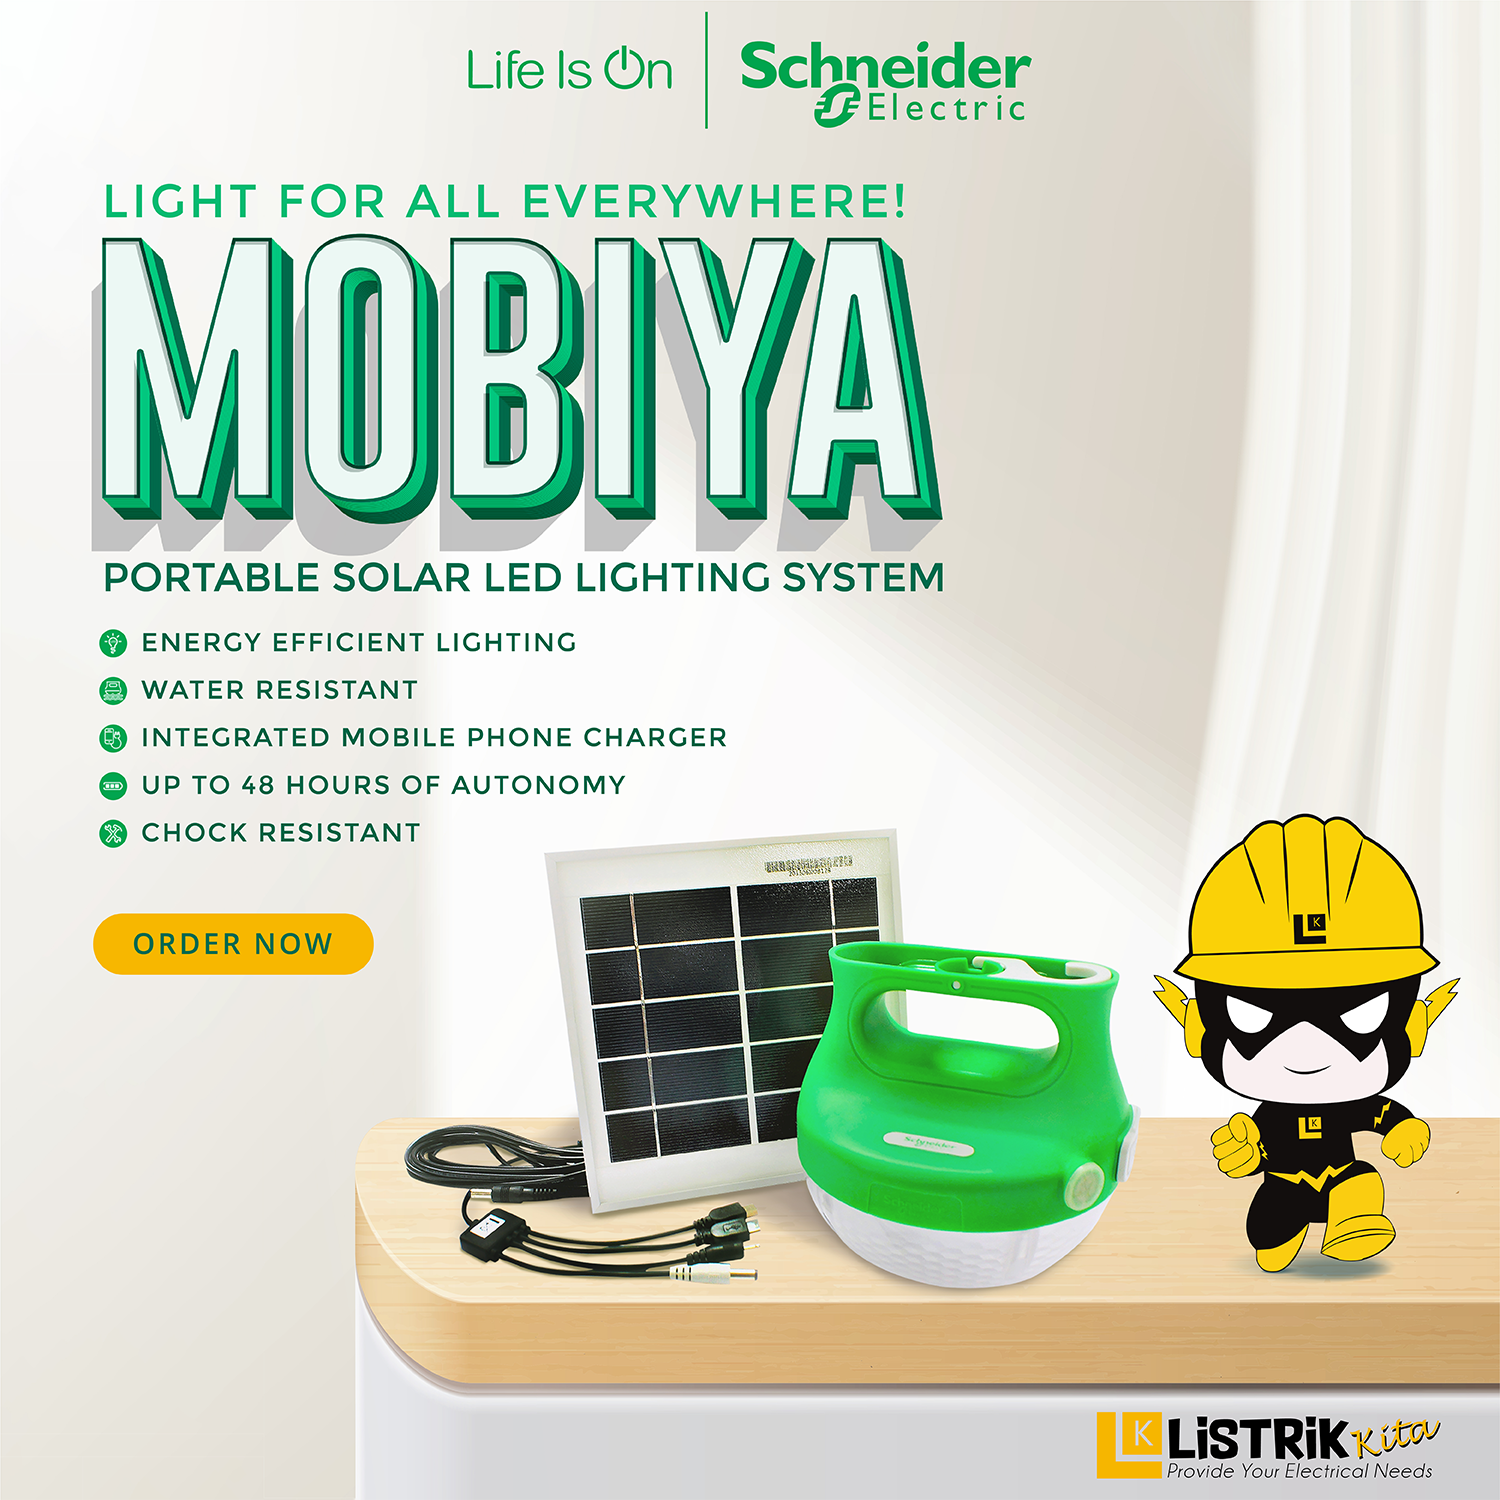 MOBIYA PORTABLE SOLAR LED LIGHTING SYSTEM